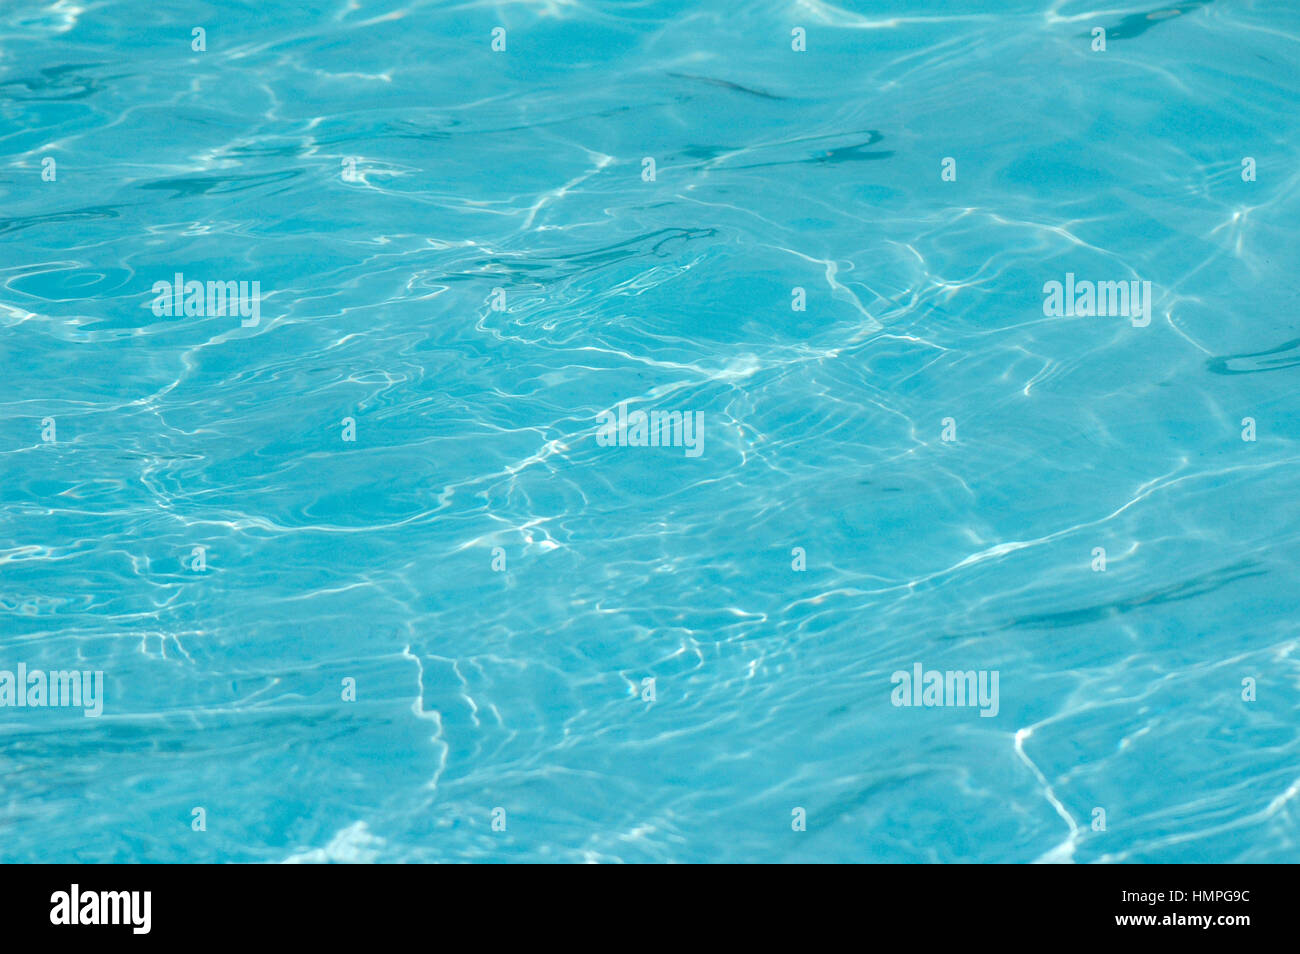 Water surface, chlorine water Stock Photo